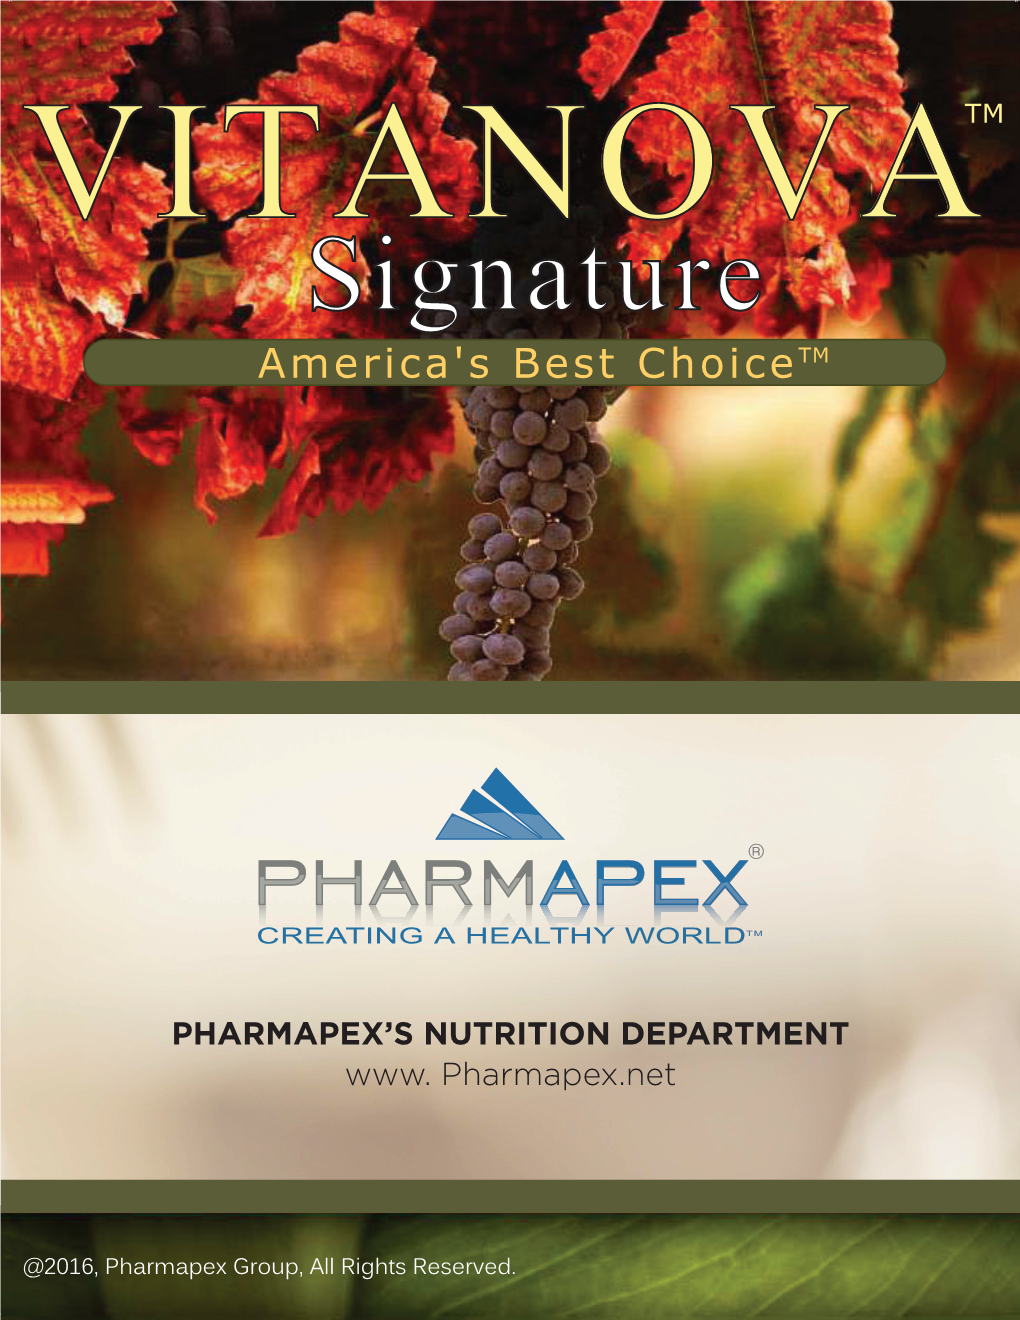 PND Releases a 200+ Page Catalog for Vitanova Signature